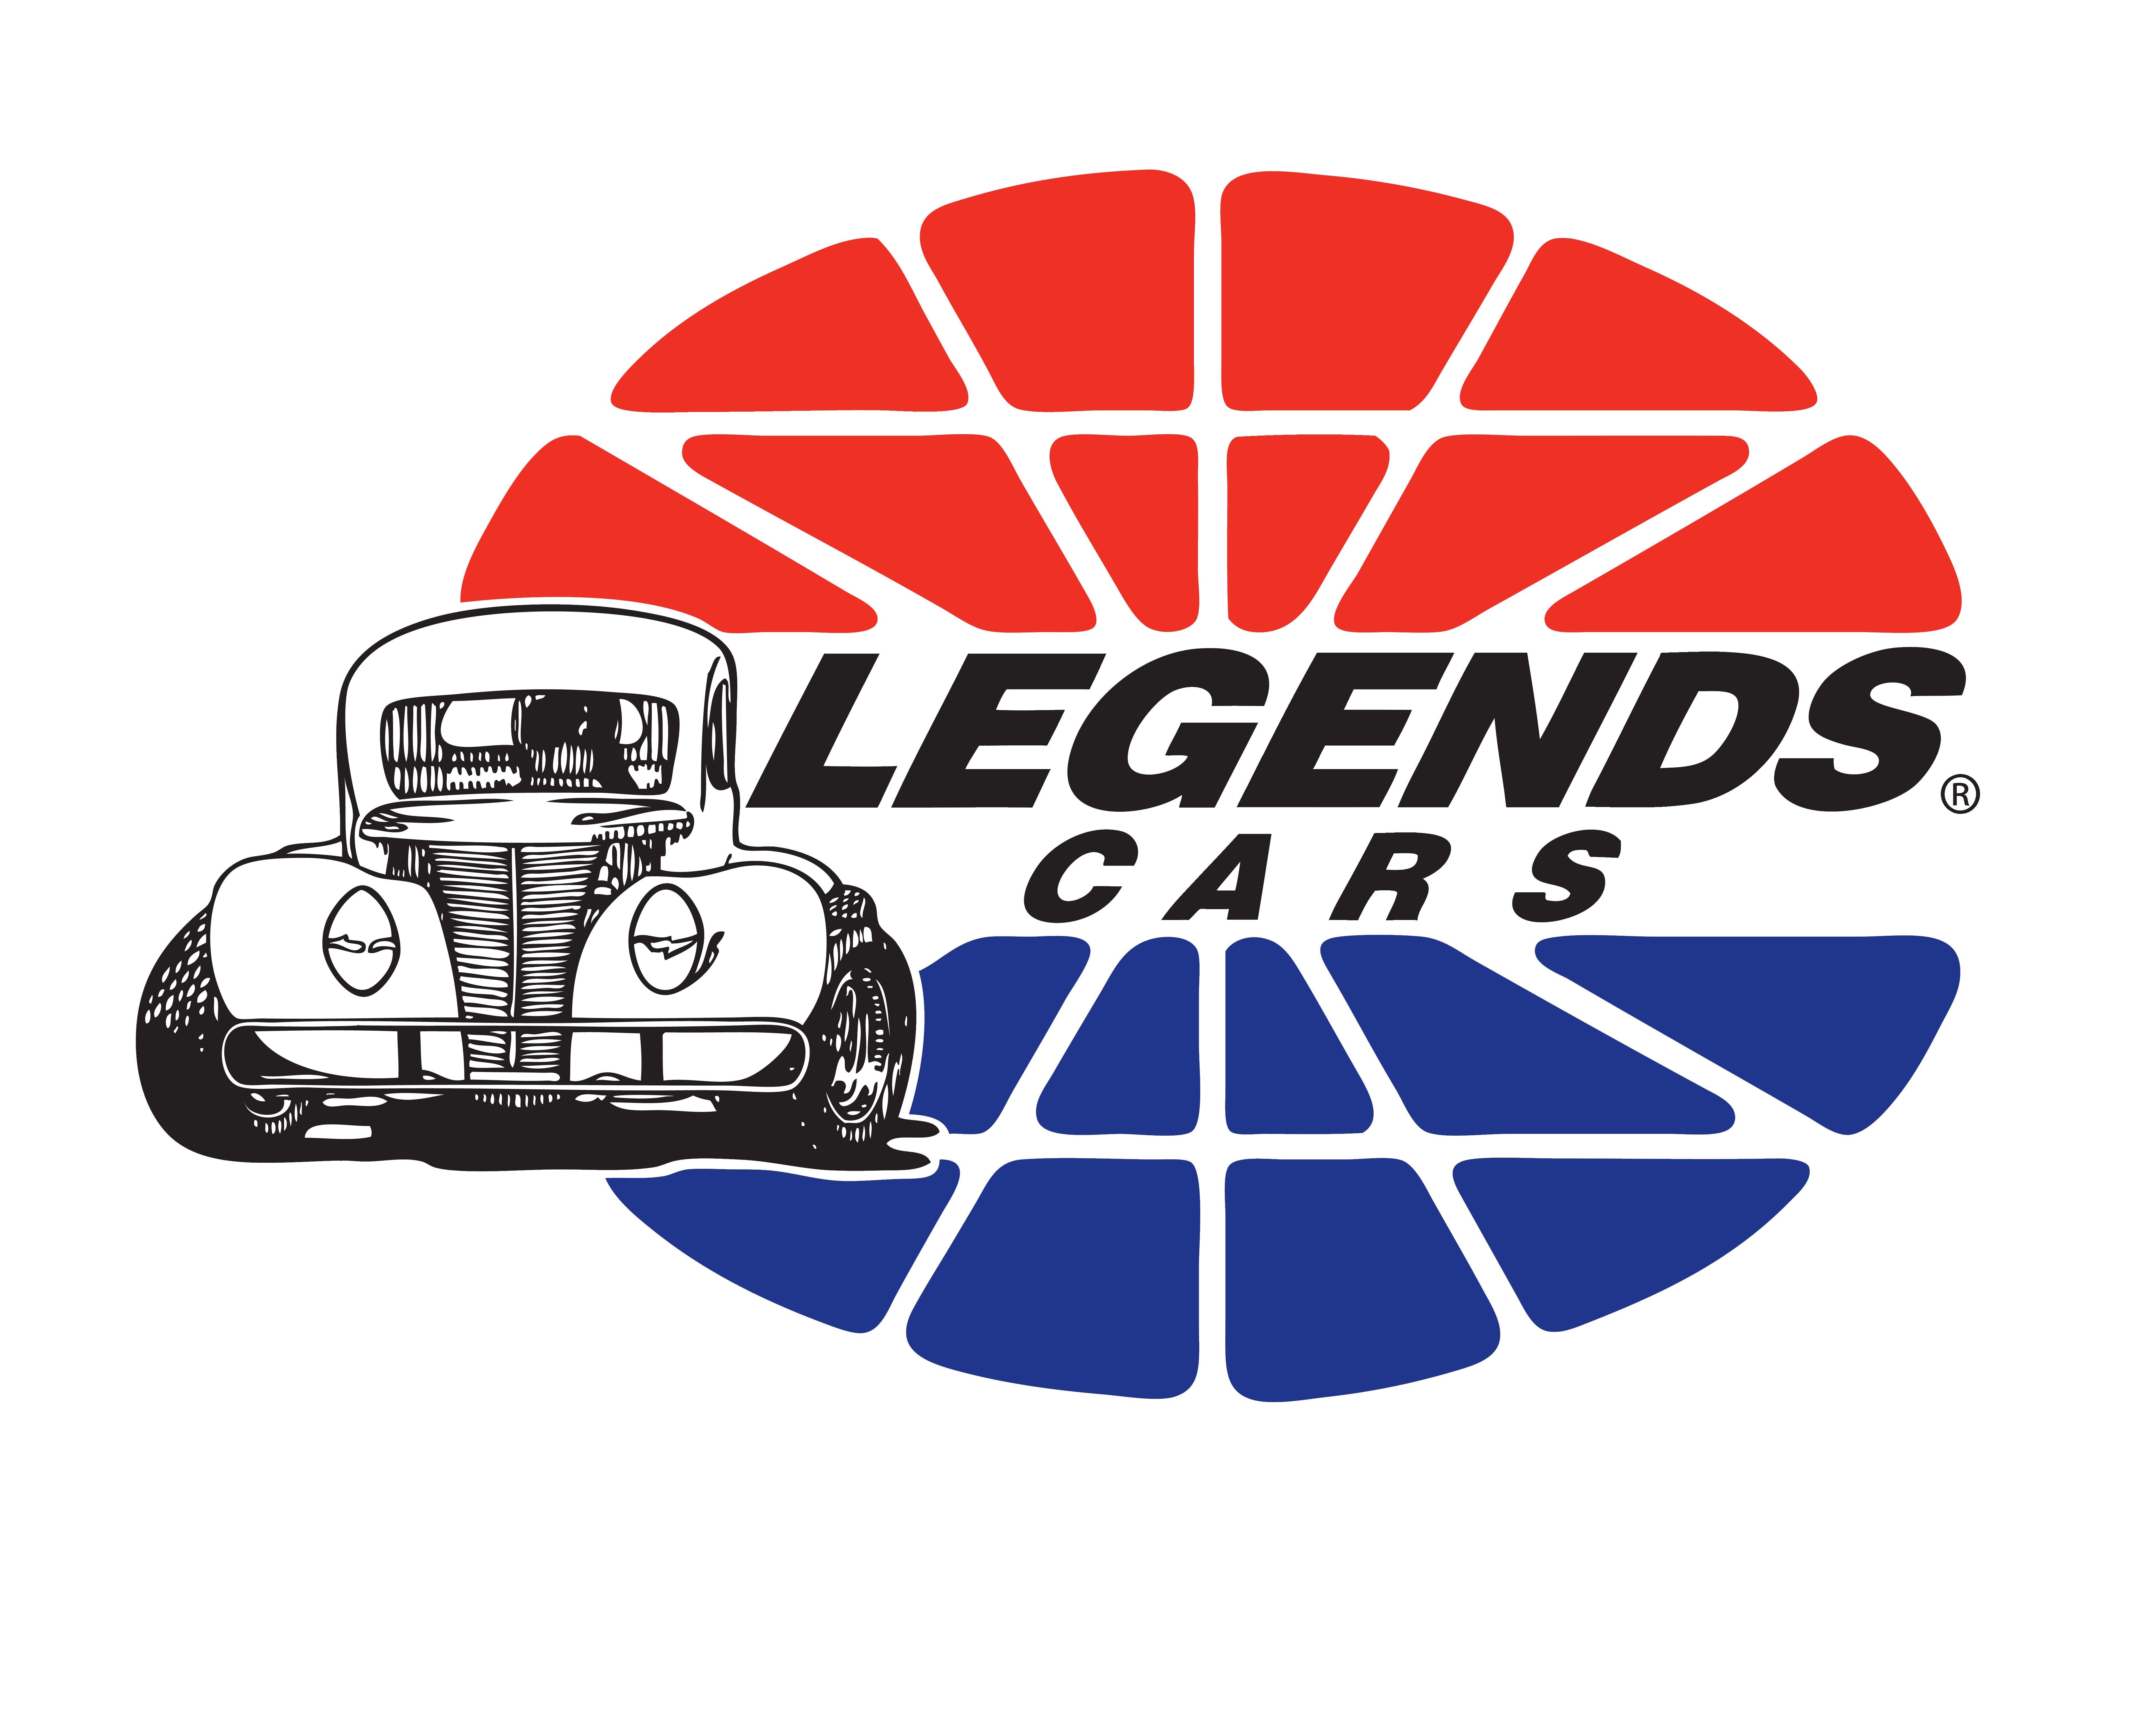 Legends Cars Championship